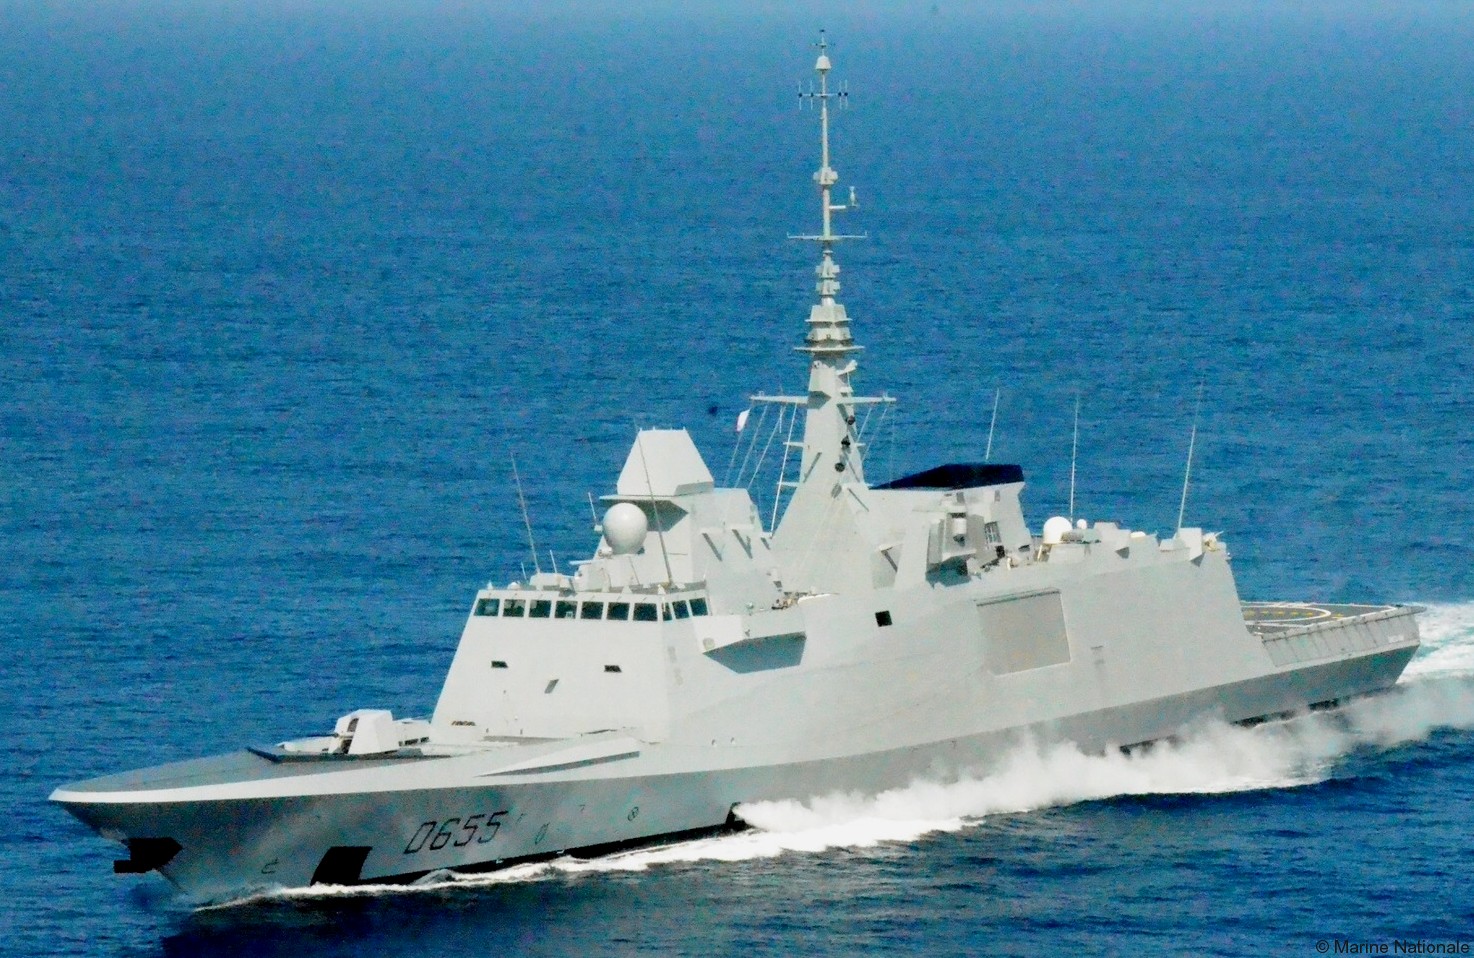 d-655 fs bretagne fremm aquitaine class frigate fregate multi purpose french navy marine nationale 10